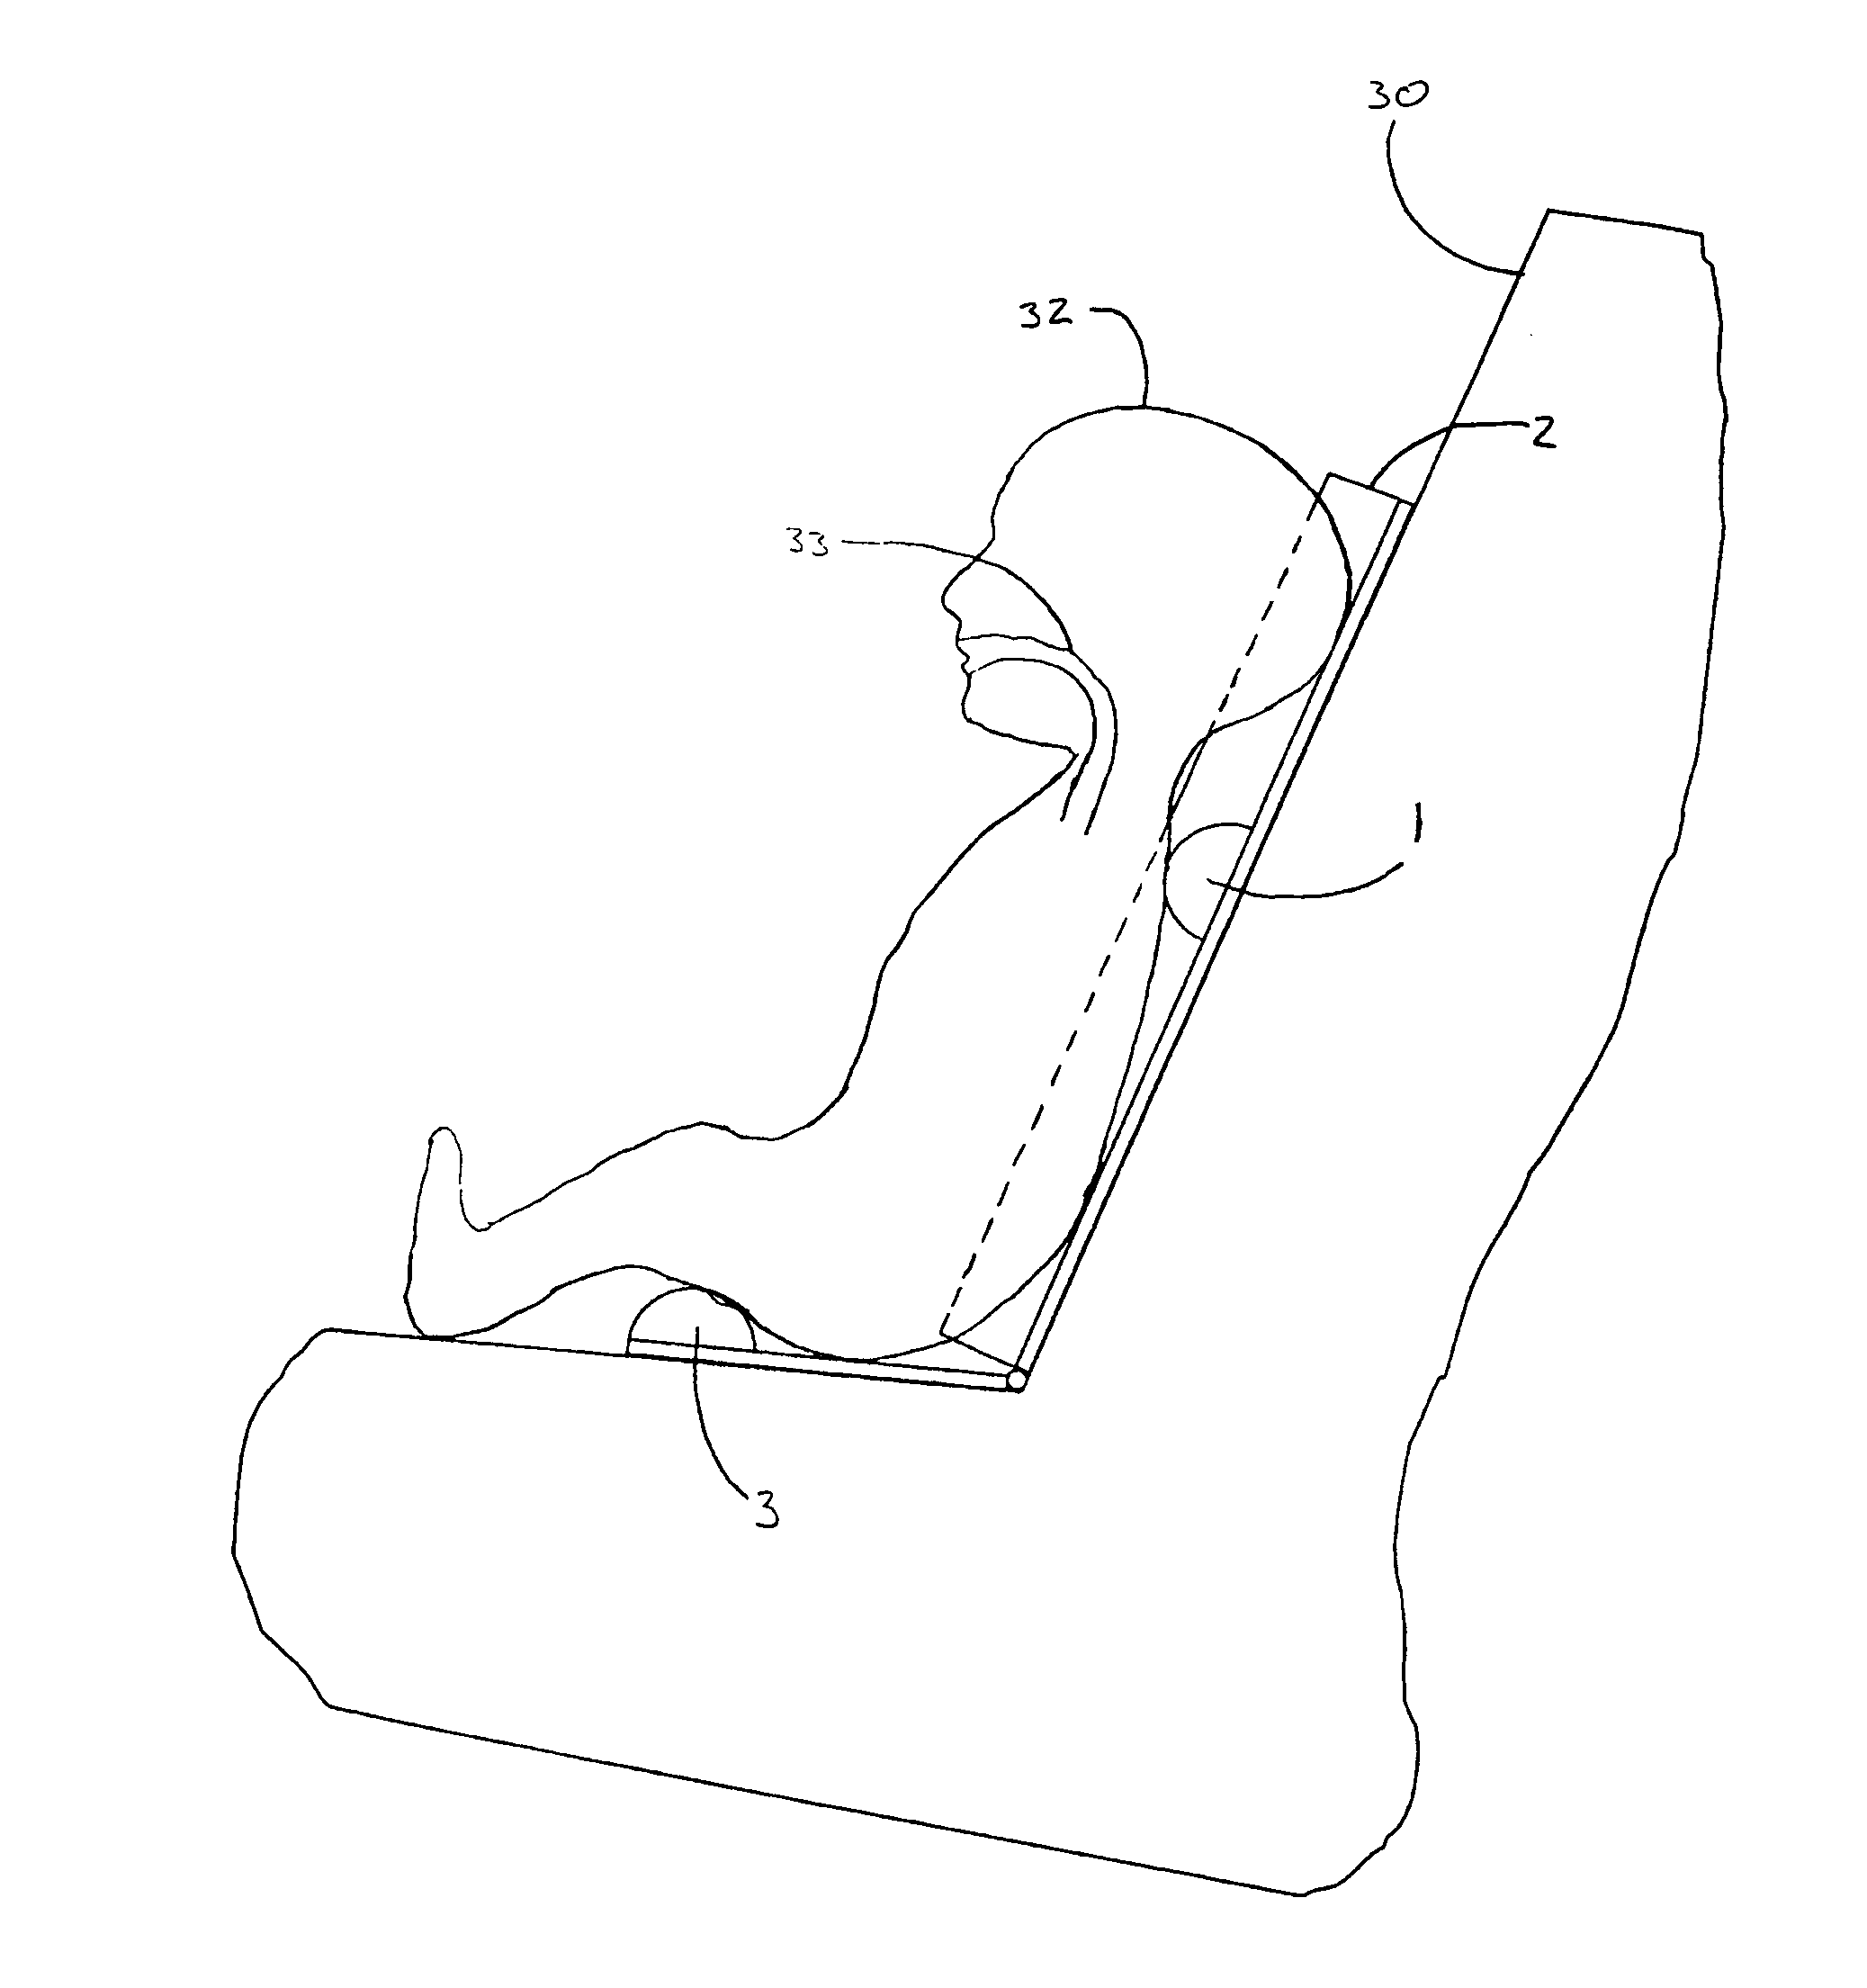 Infant positioning seat insert